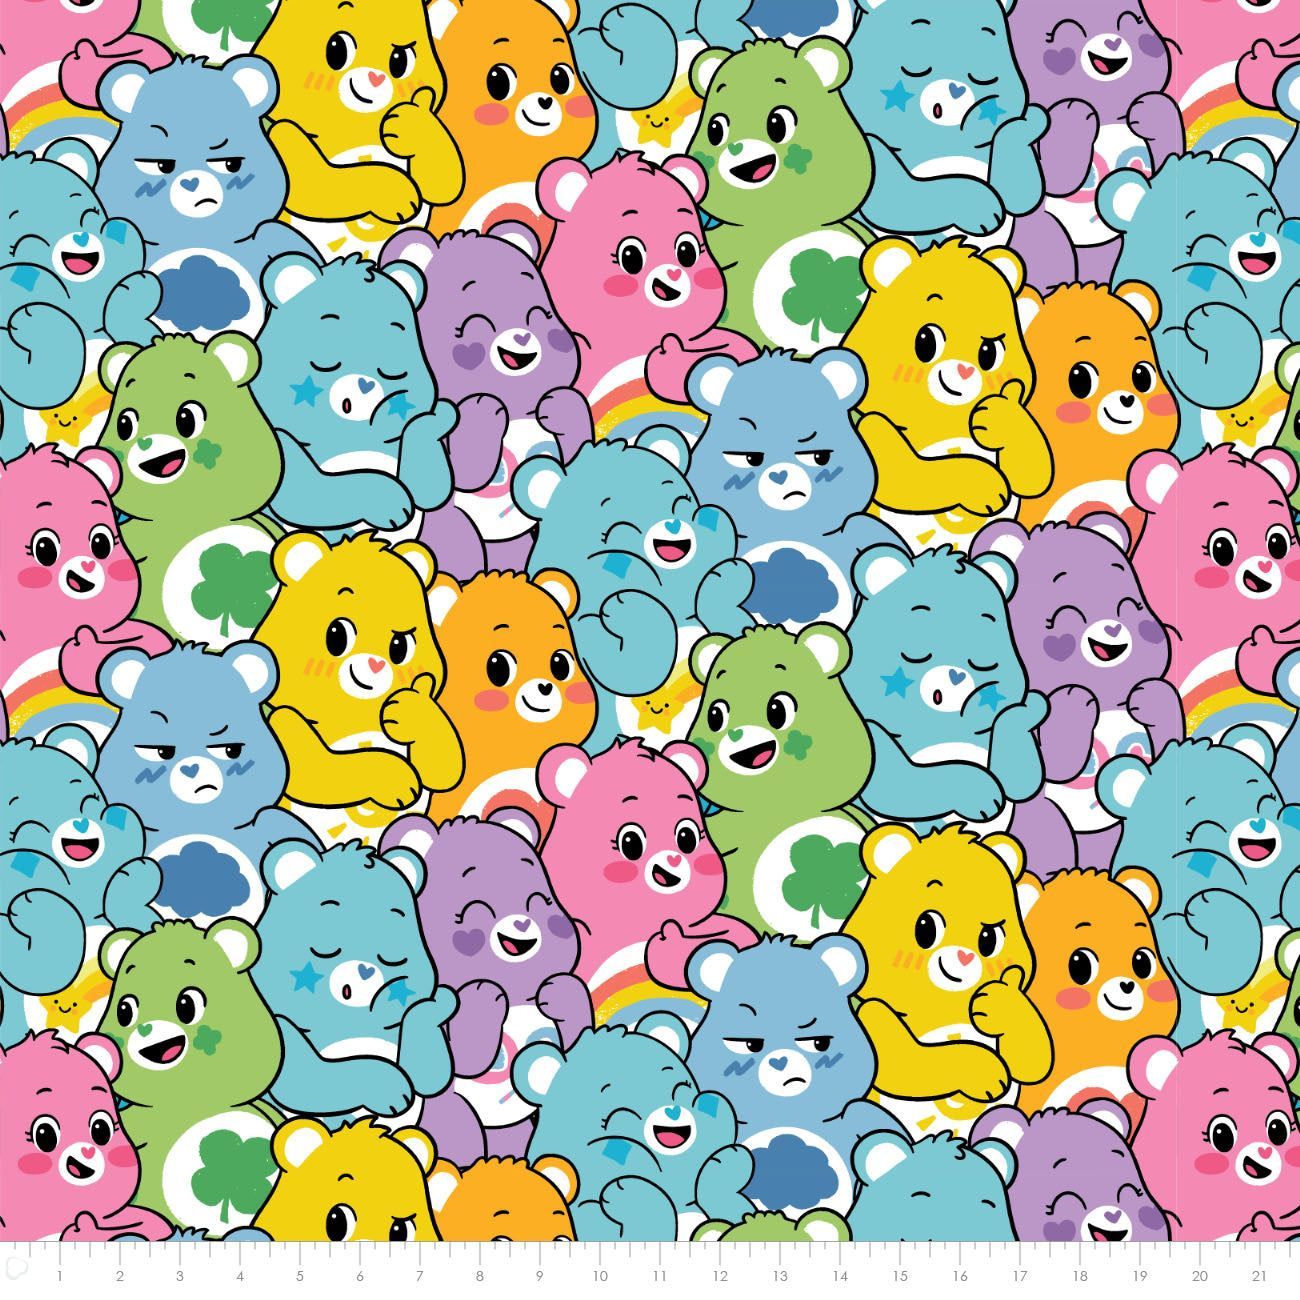 Care Bears fabric minky print with the bears in a pile. - Care Bears